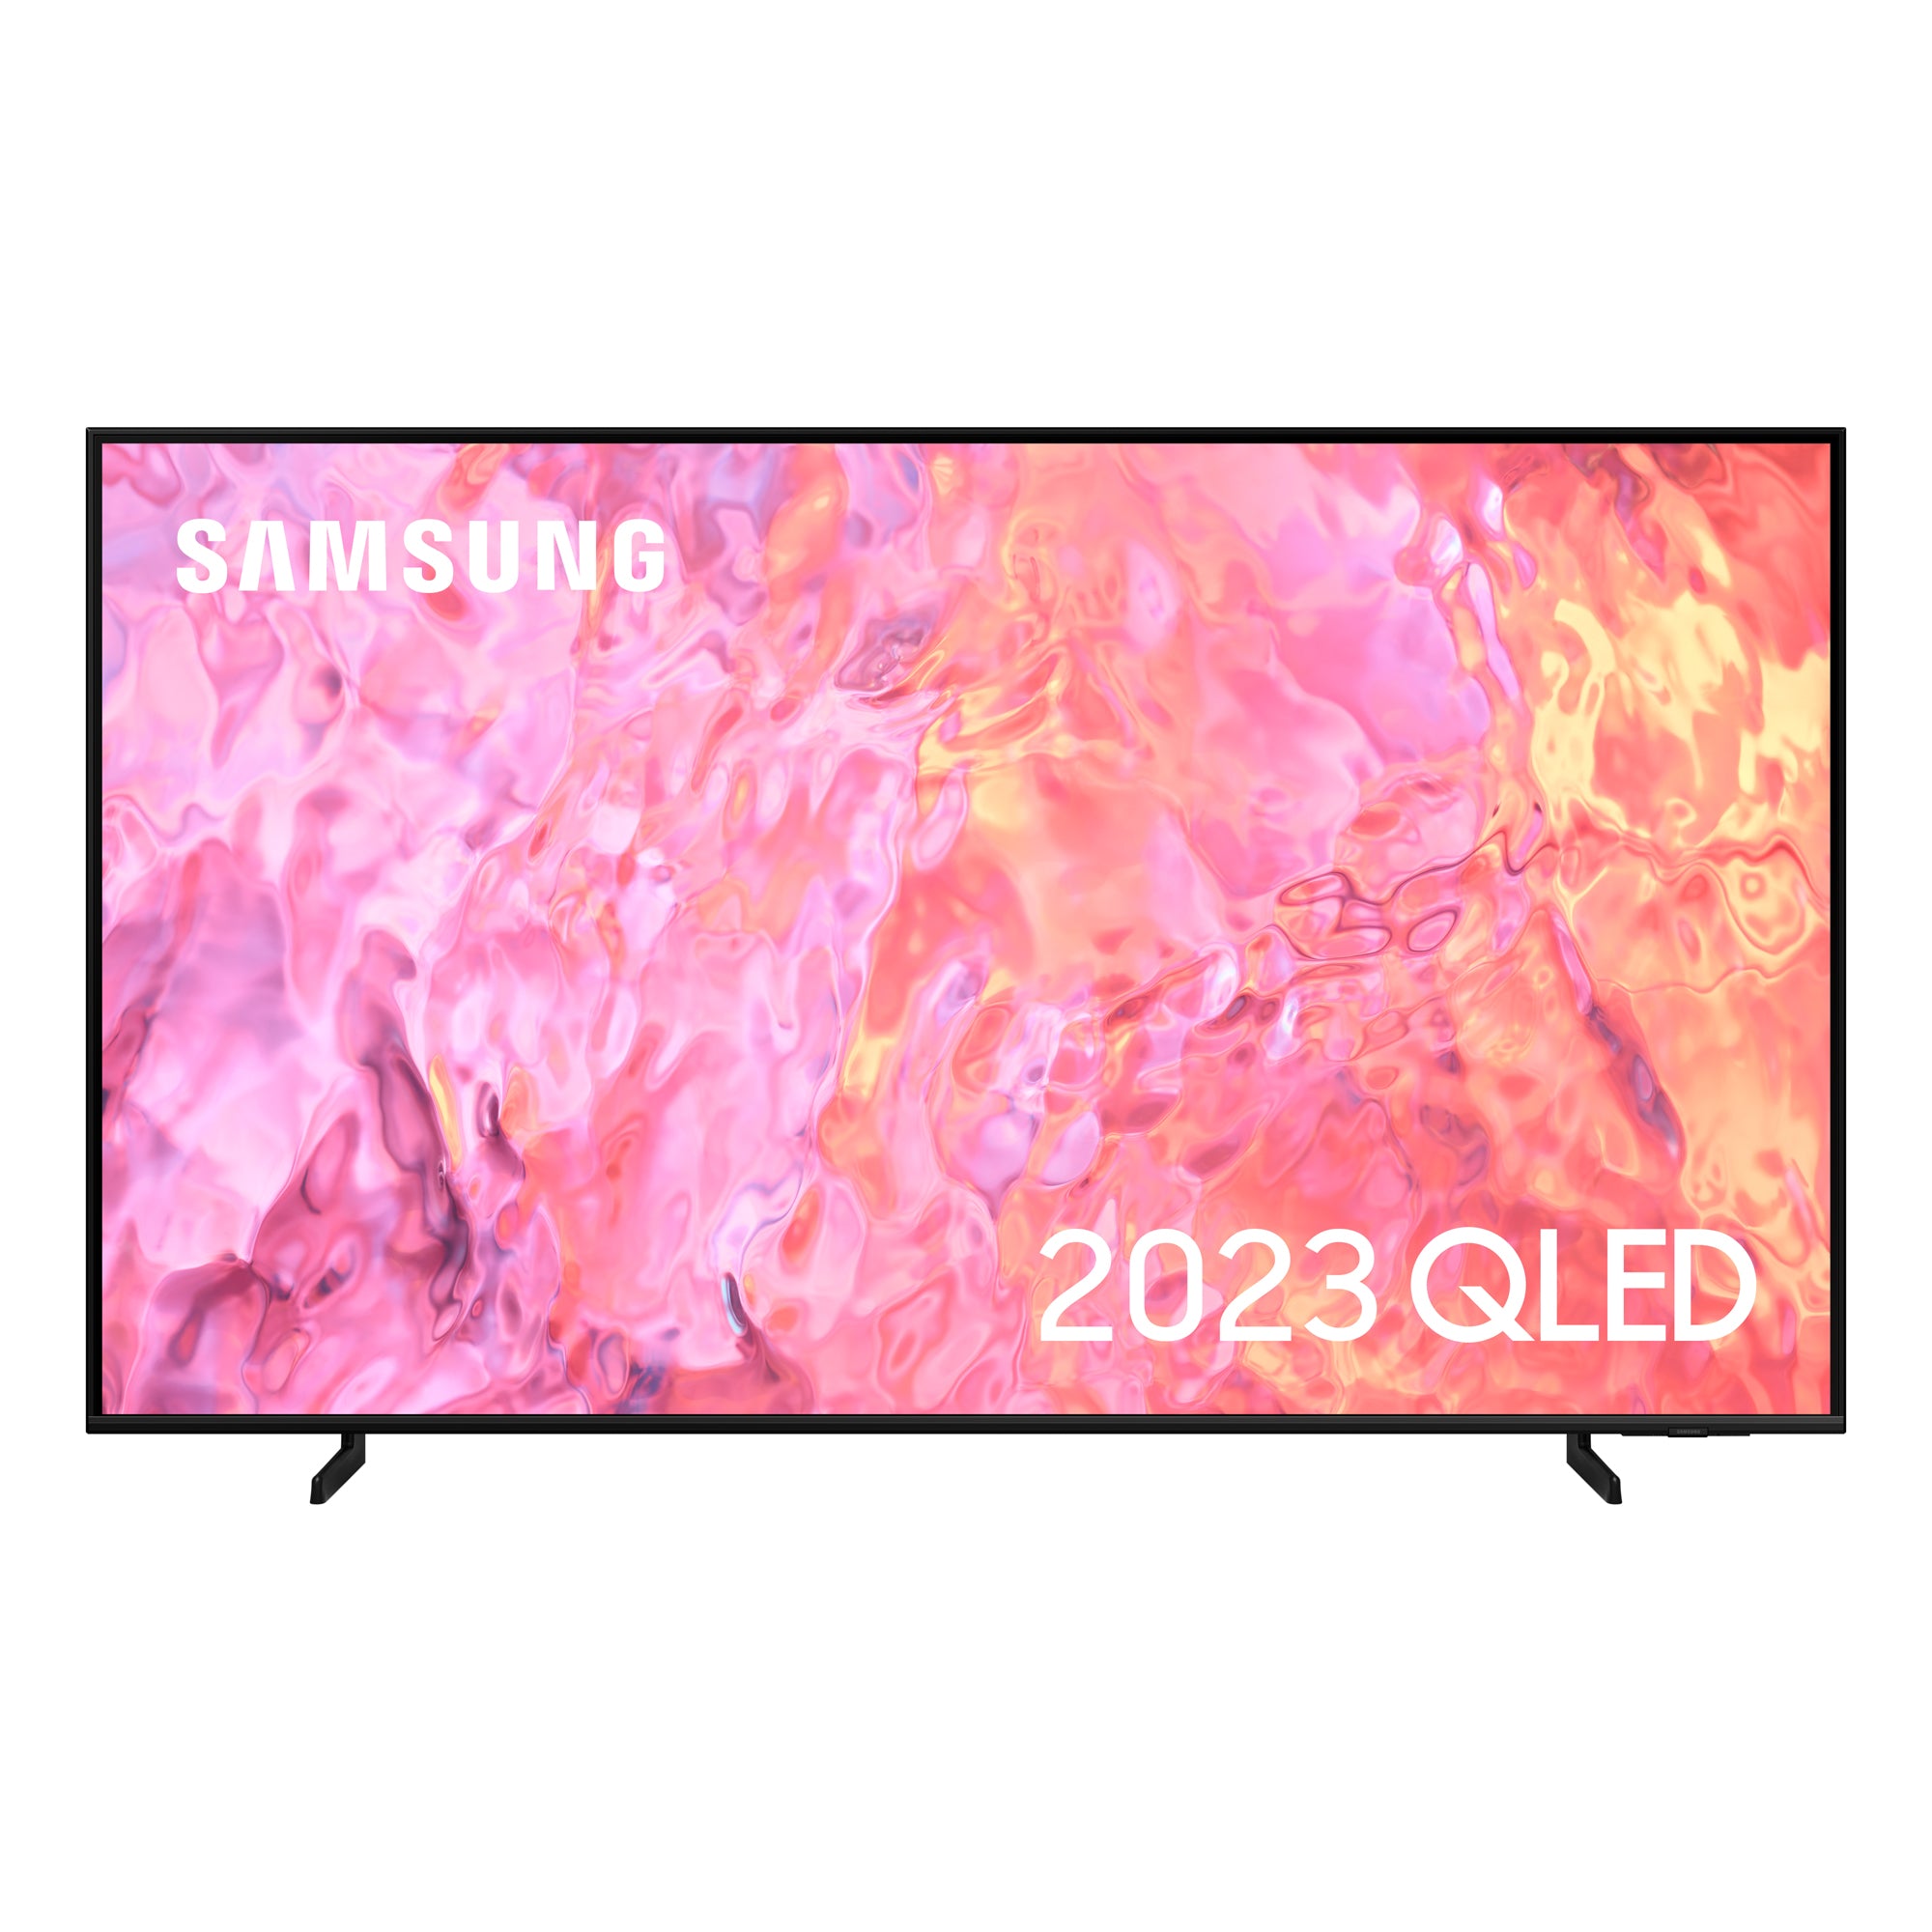 Samsung Q60C 55" 4K HDR QLED Smart TV - Black | QE55Q60CAUXXU from Samsung - DID Electrical